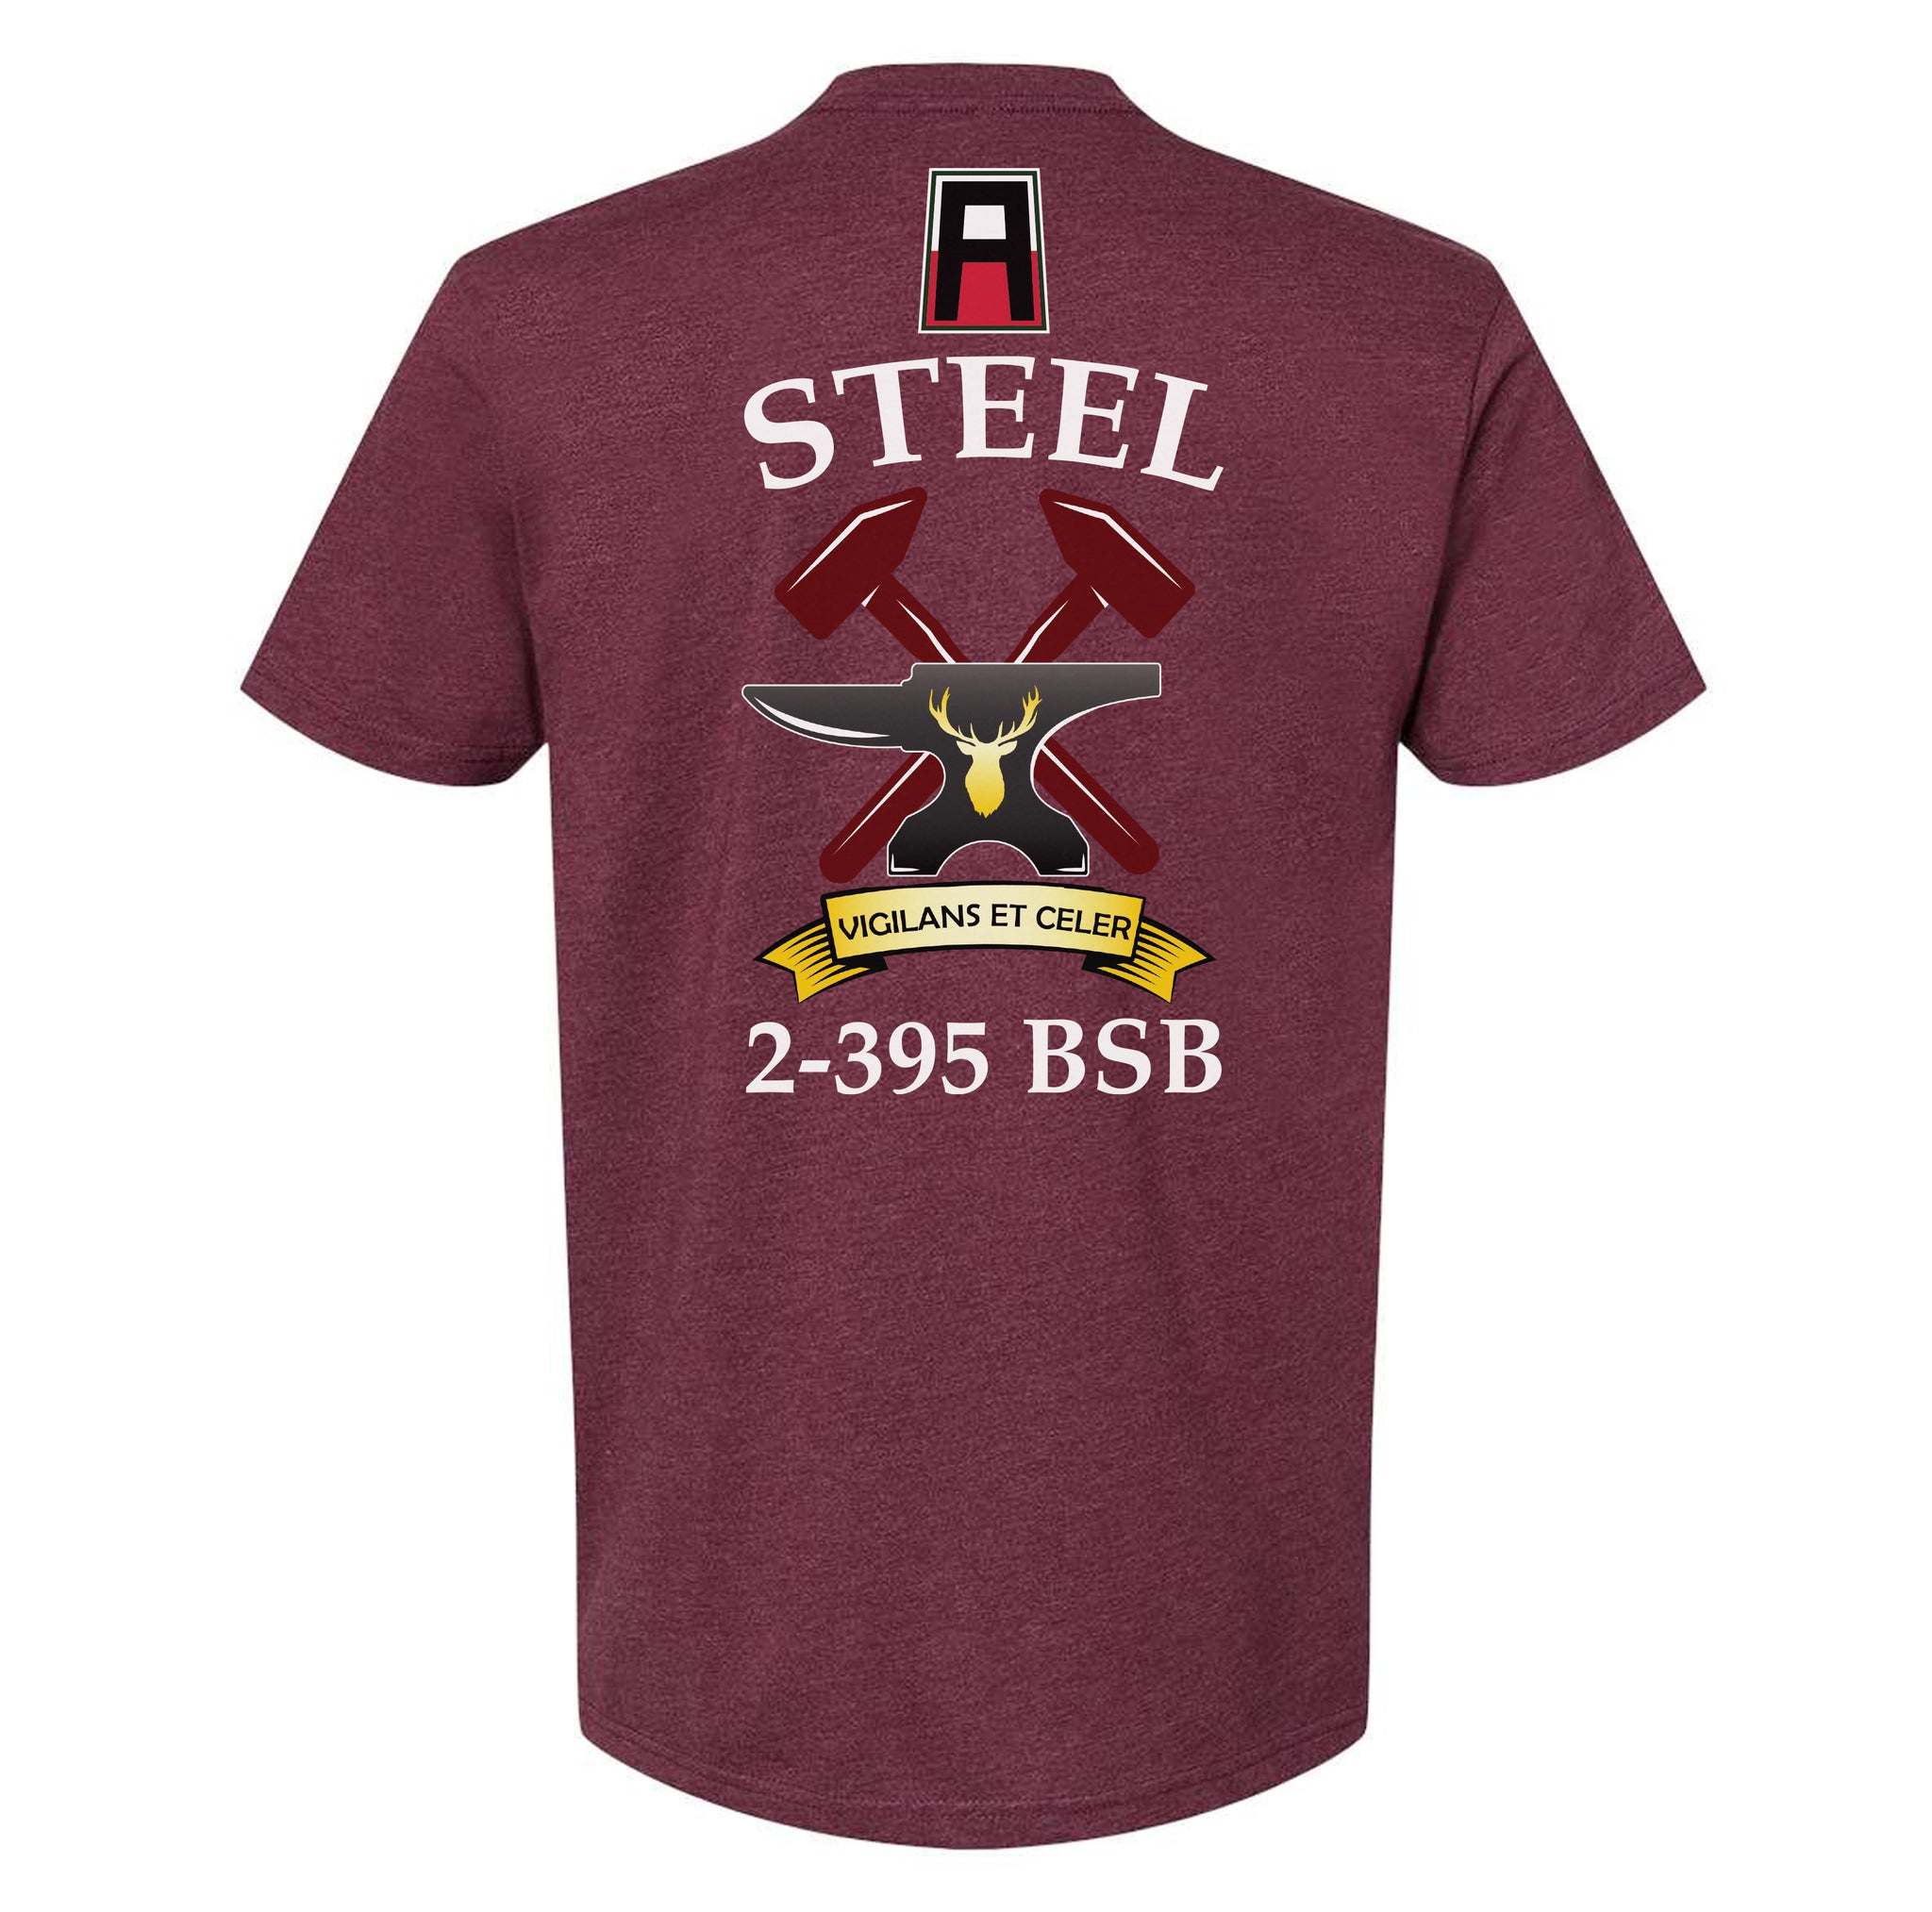 2-395th Steel "Vigilans Et Celer" Tee